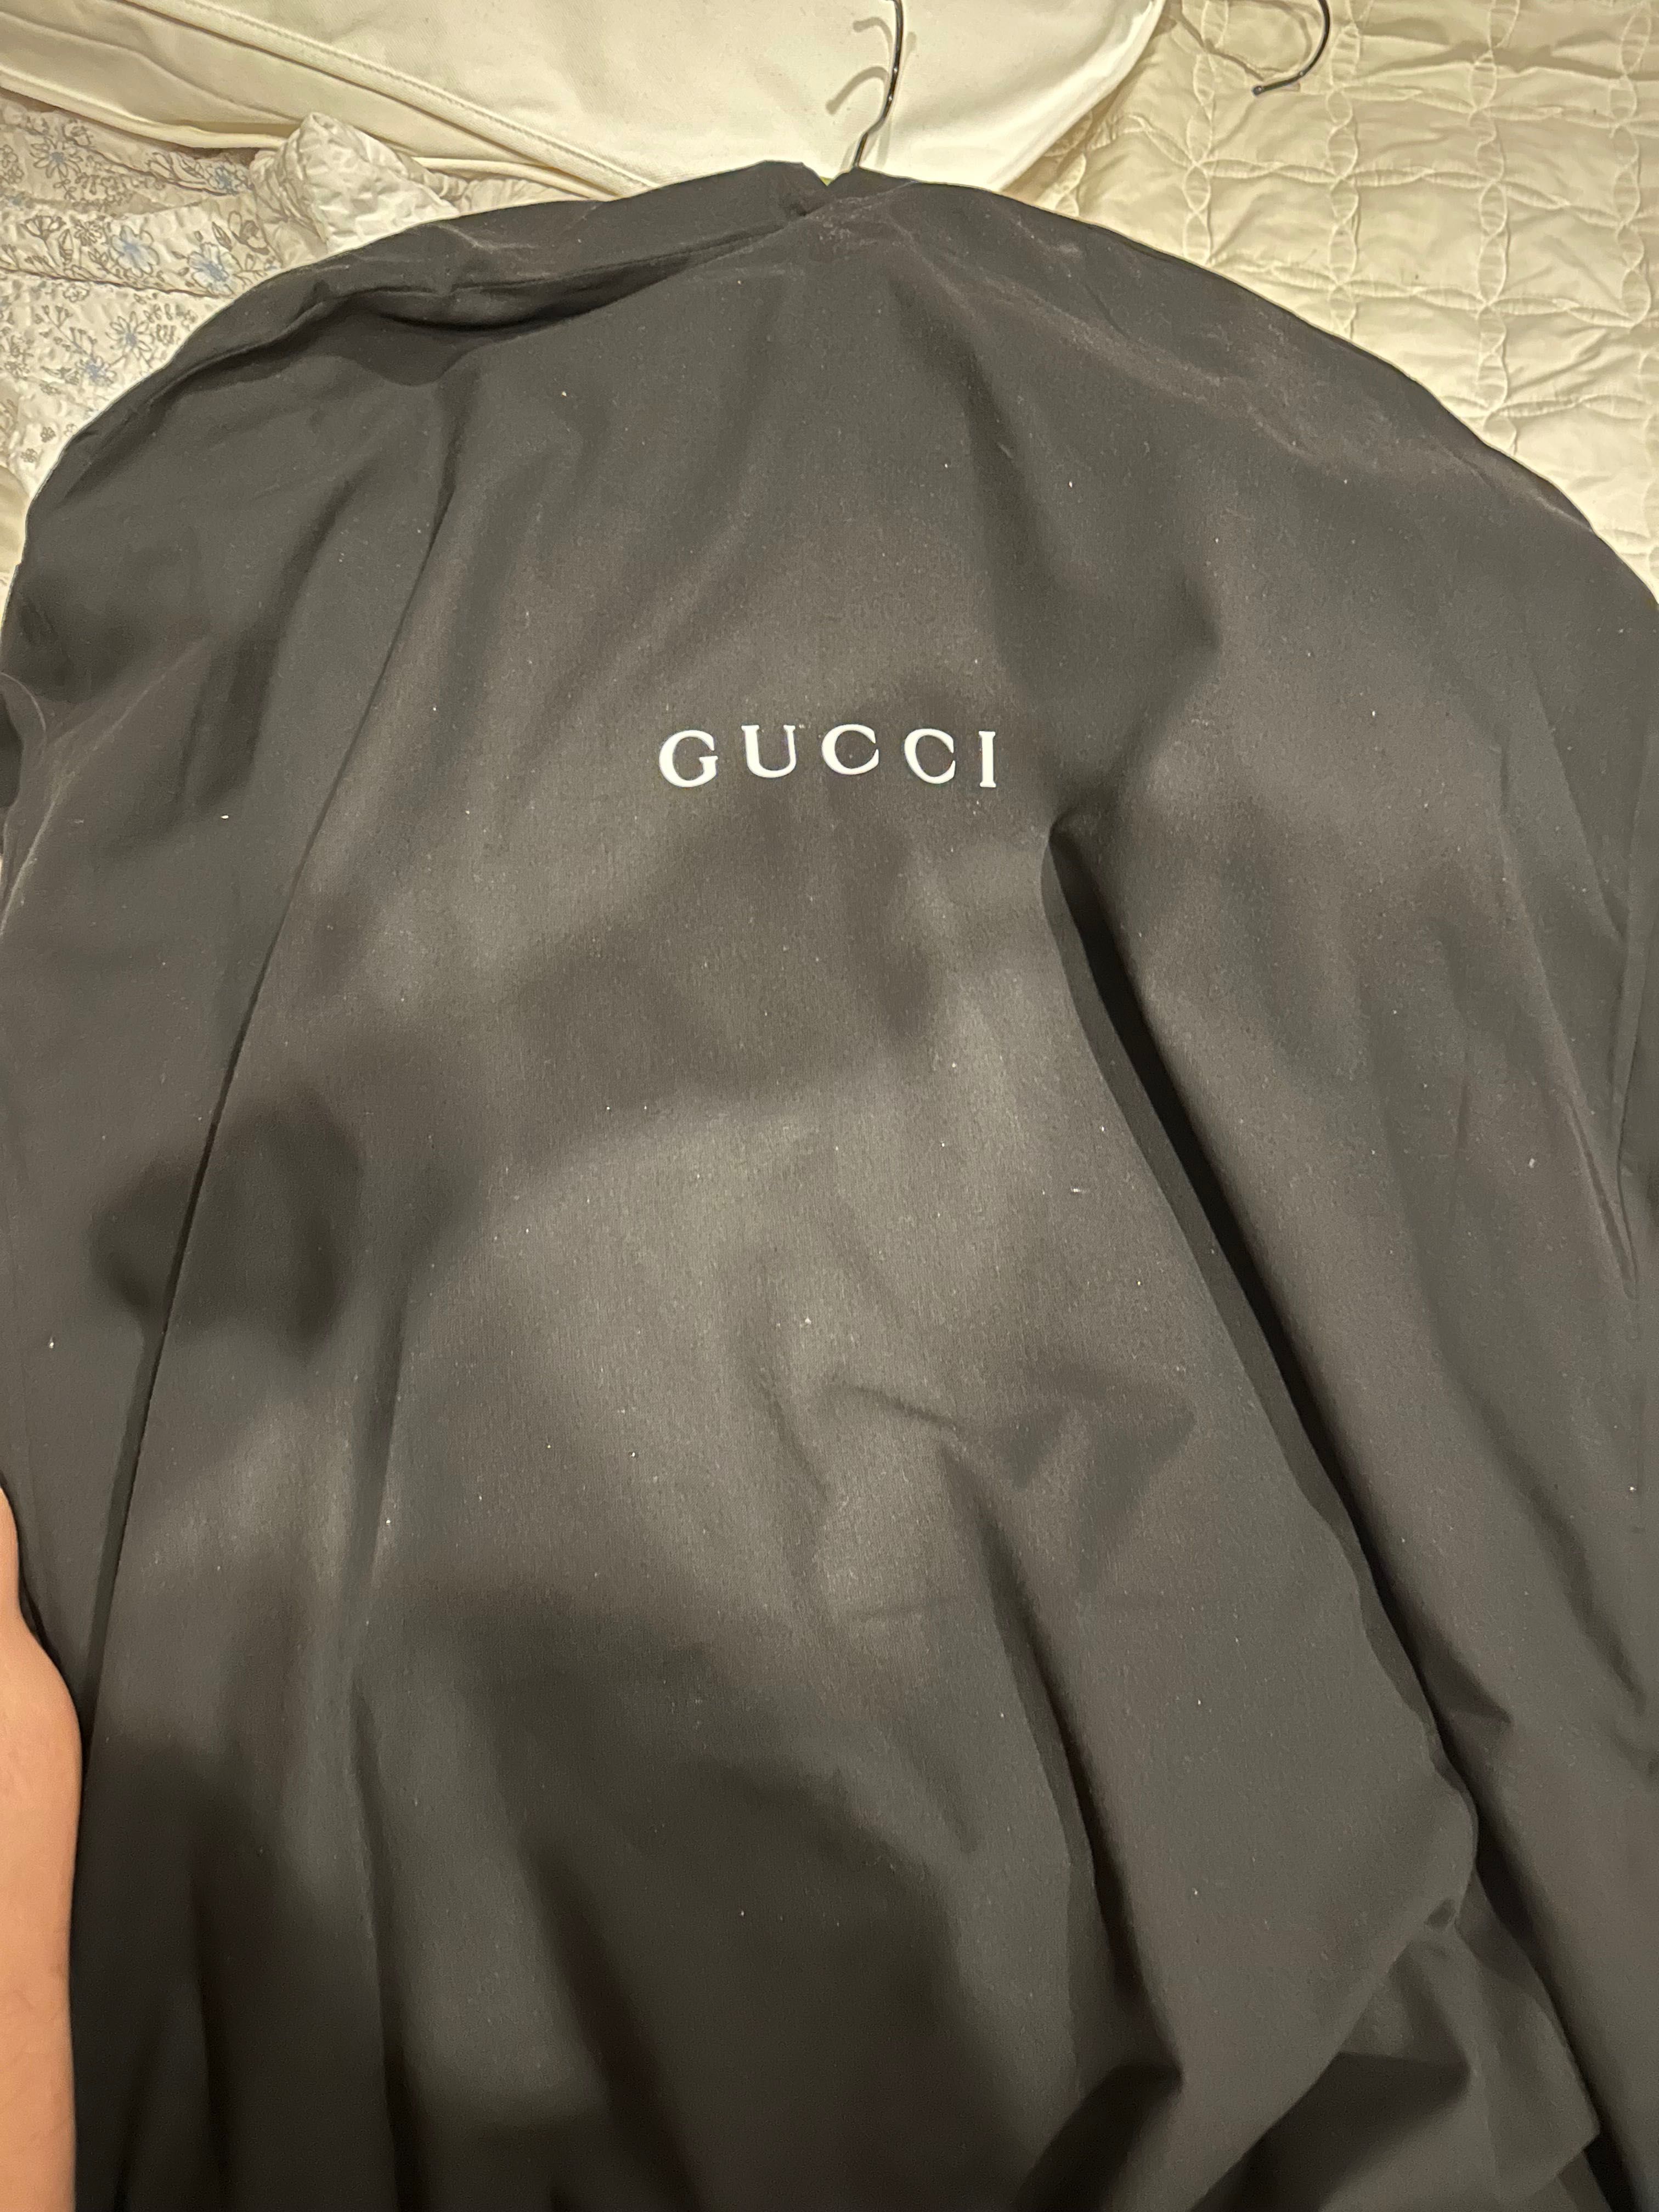 Gucci cloths for man